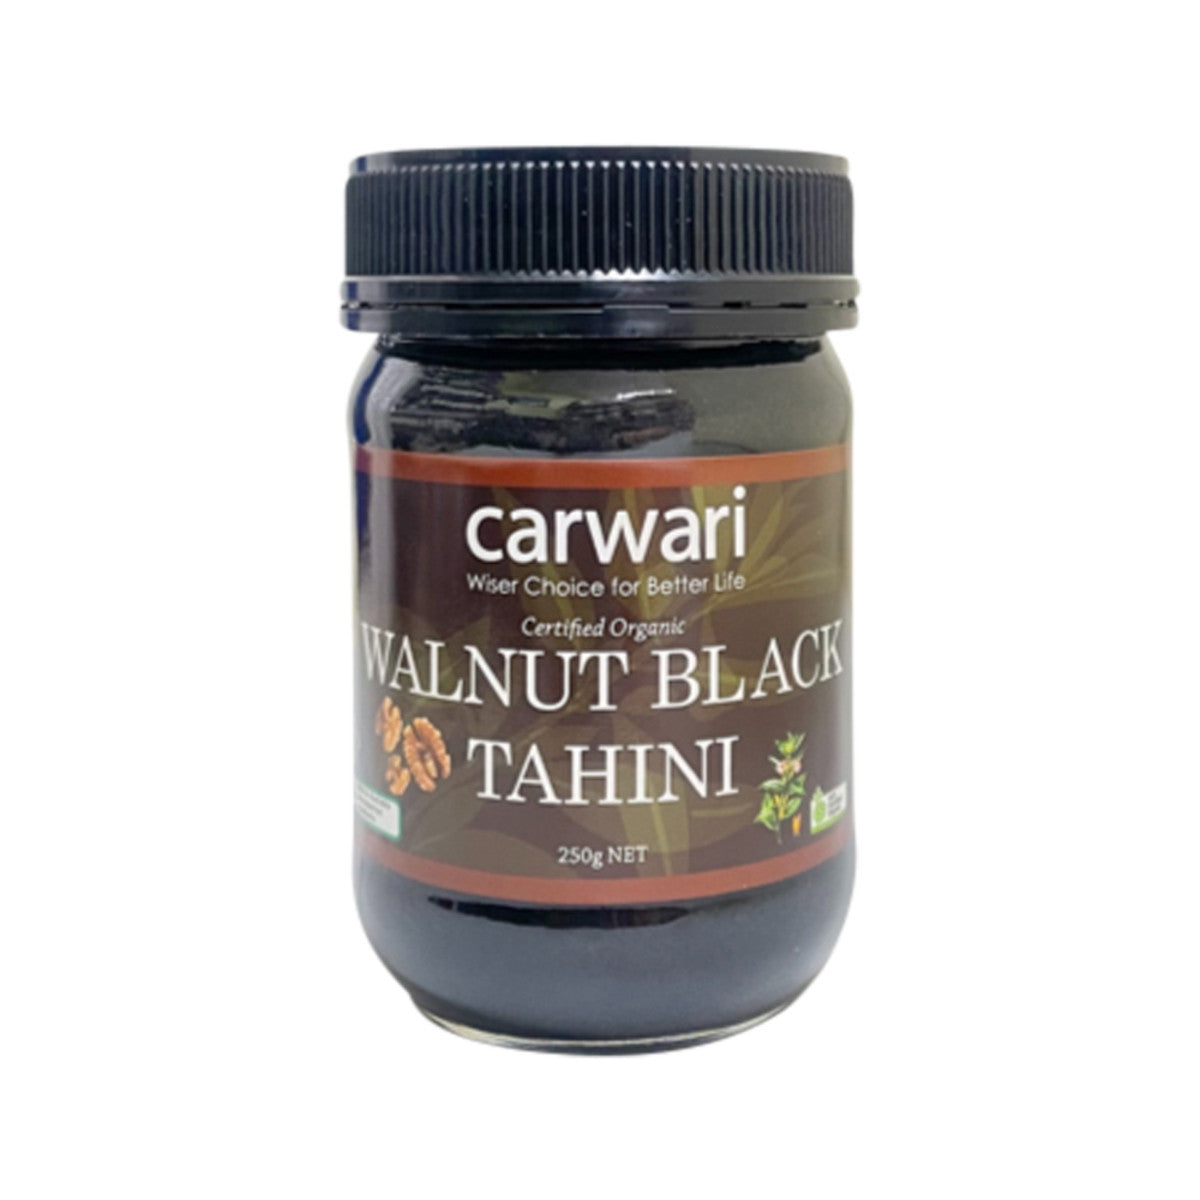 Carwari Walnut Black Tahini 250g, Certified Organic